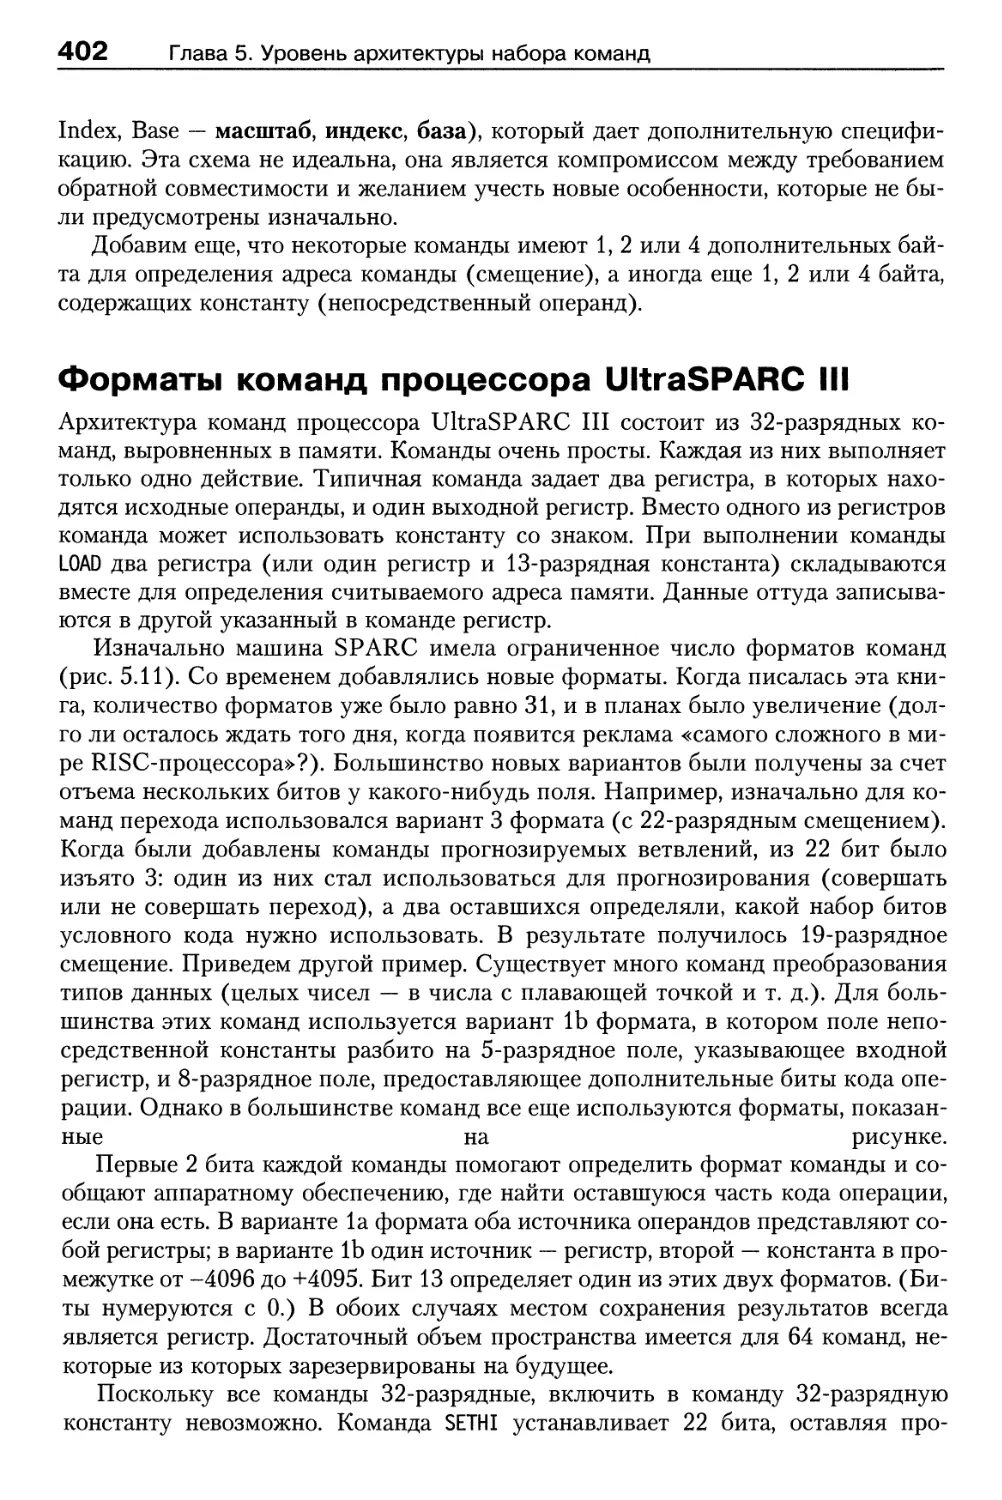 Форматы команд процессора UltraSPARC III